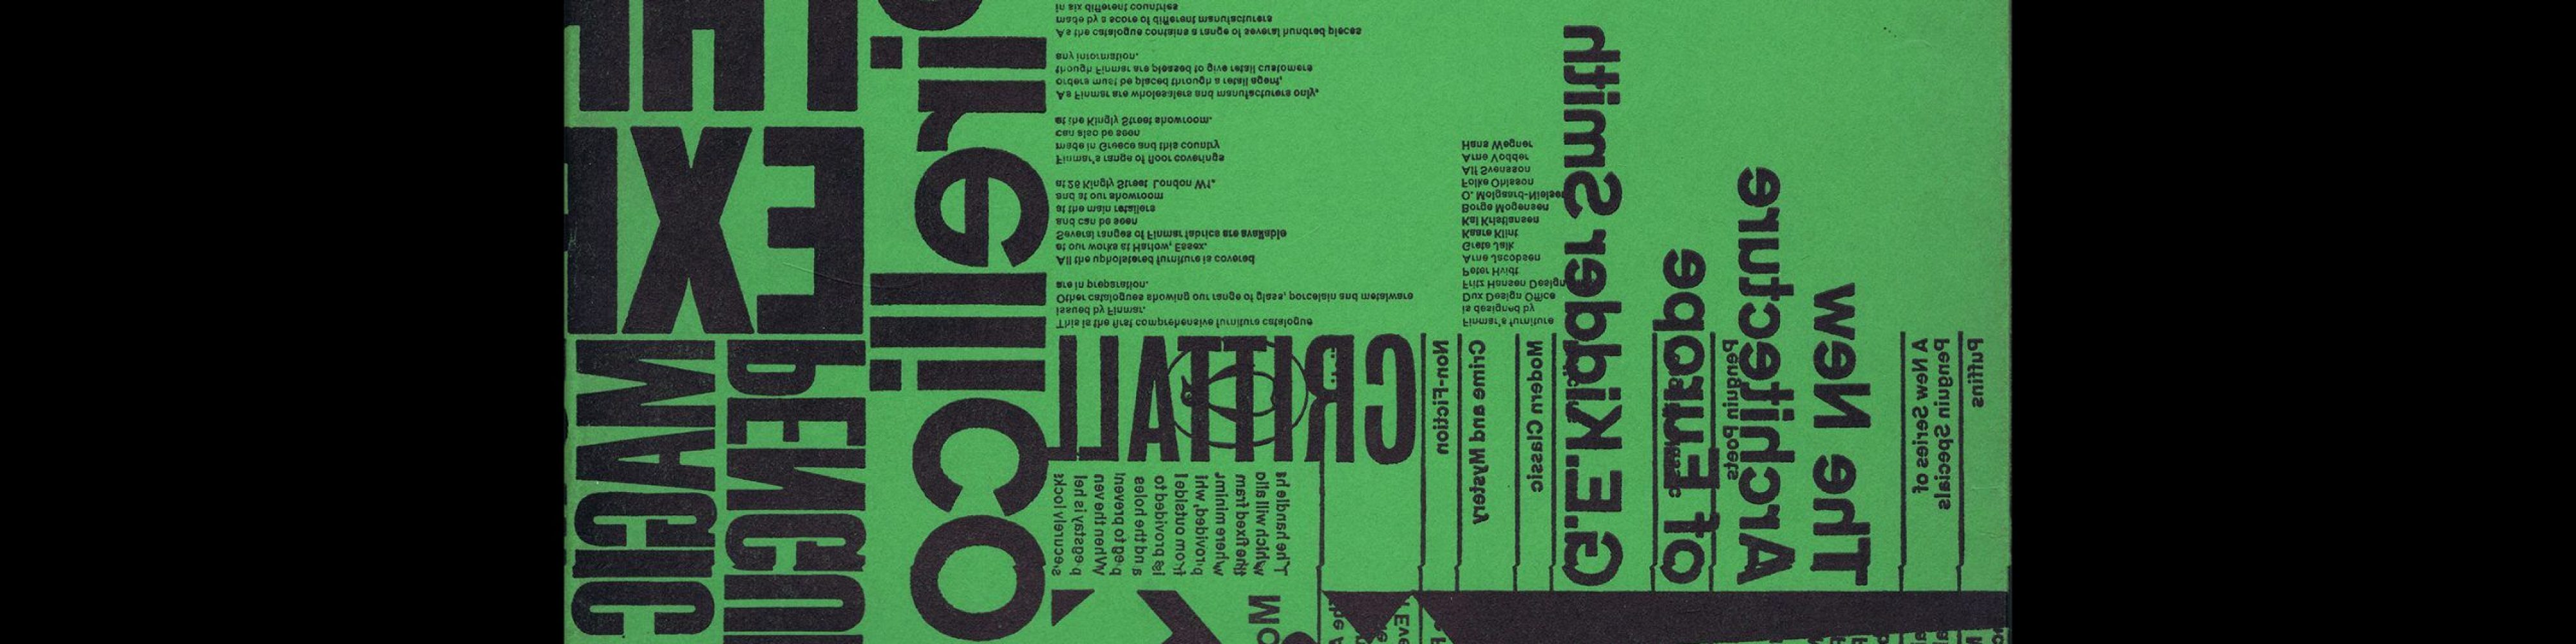 Typographica, New Series 7, 1963. Designed by Herbert Spencer